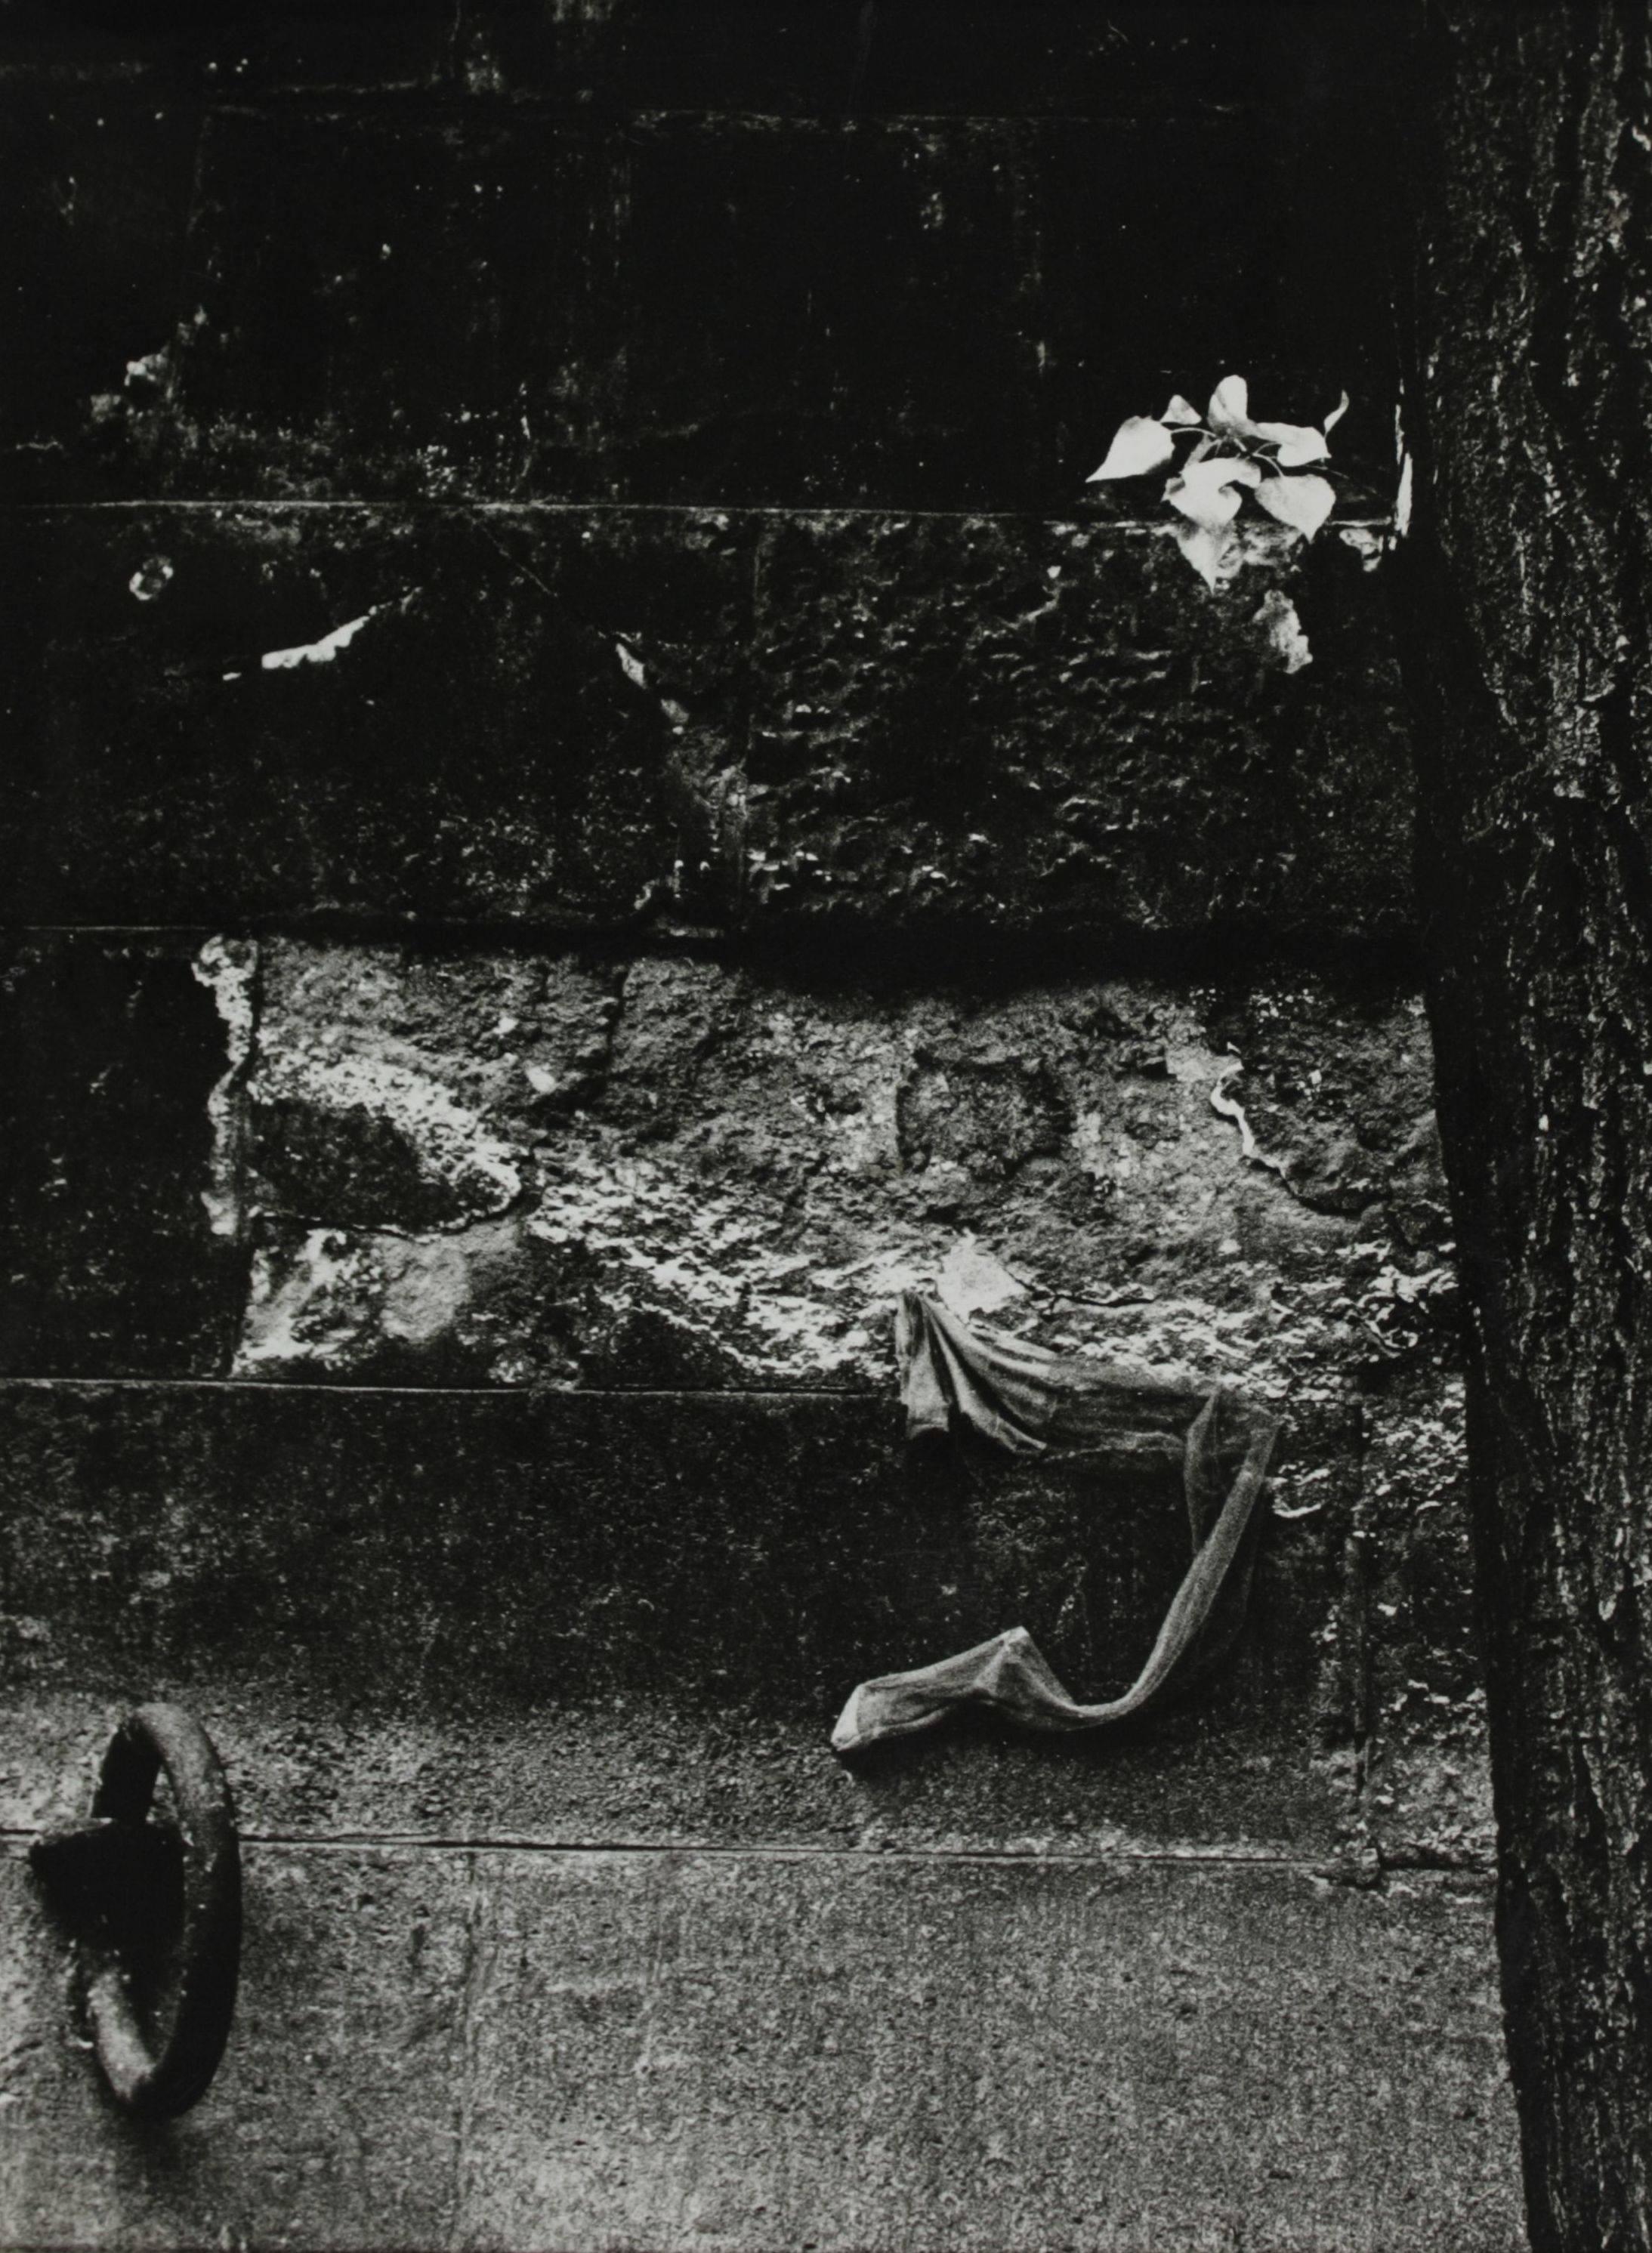 Xavier Miserachs Abstract Photograph - París (Abstraction series)